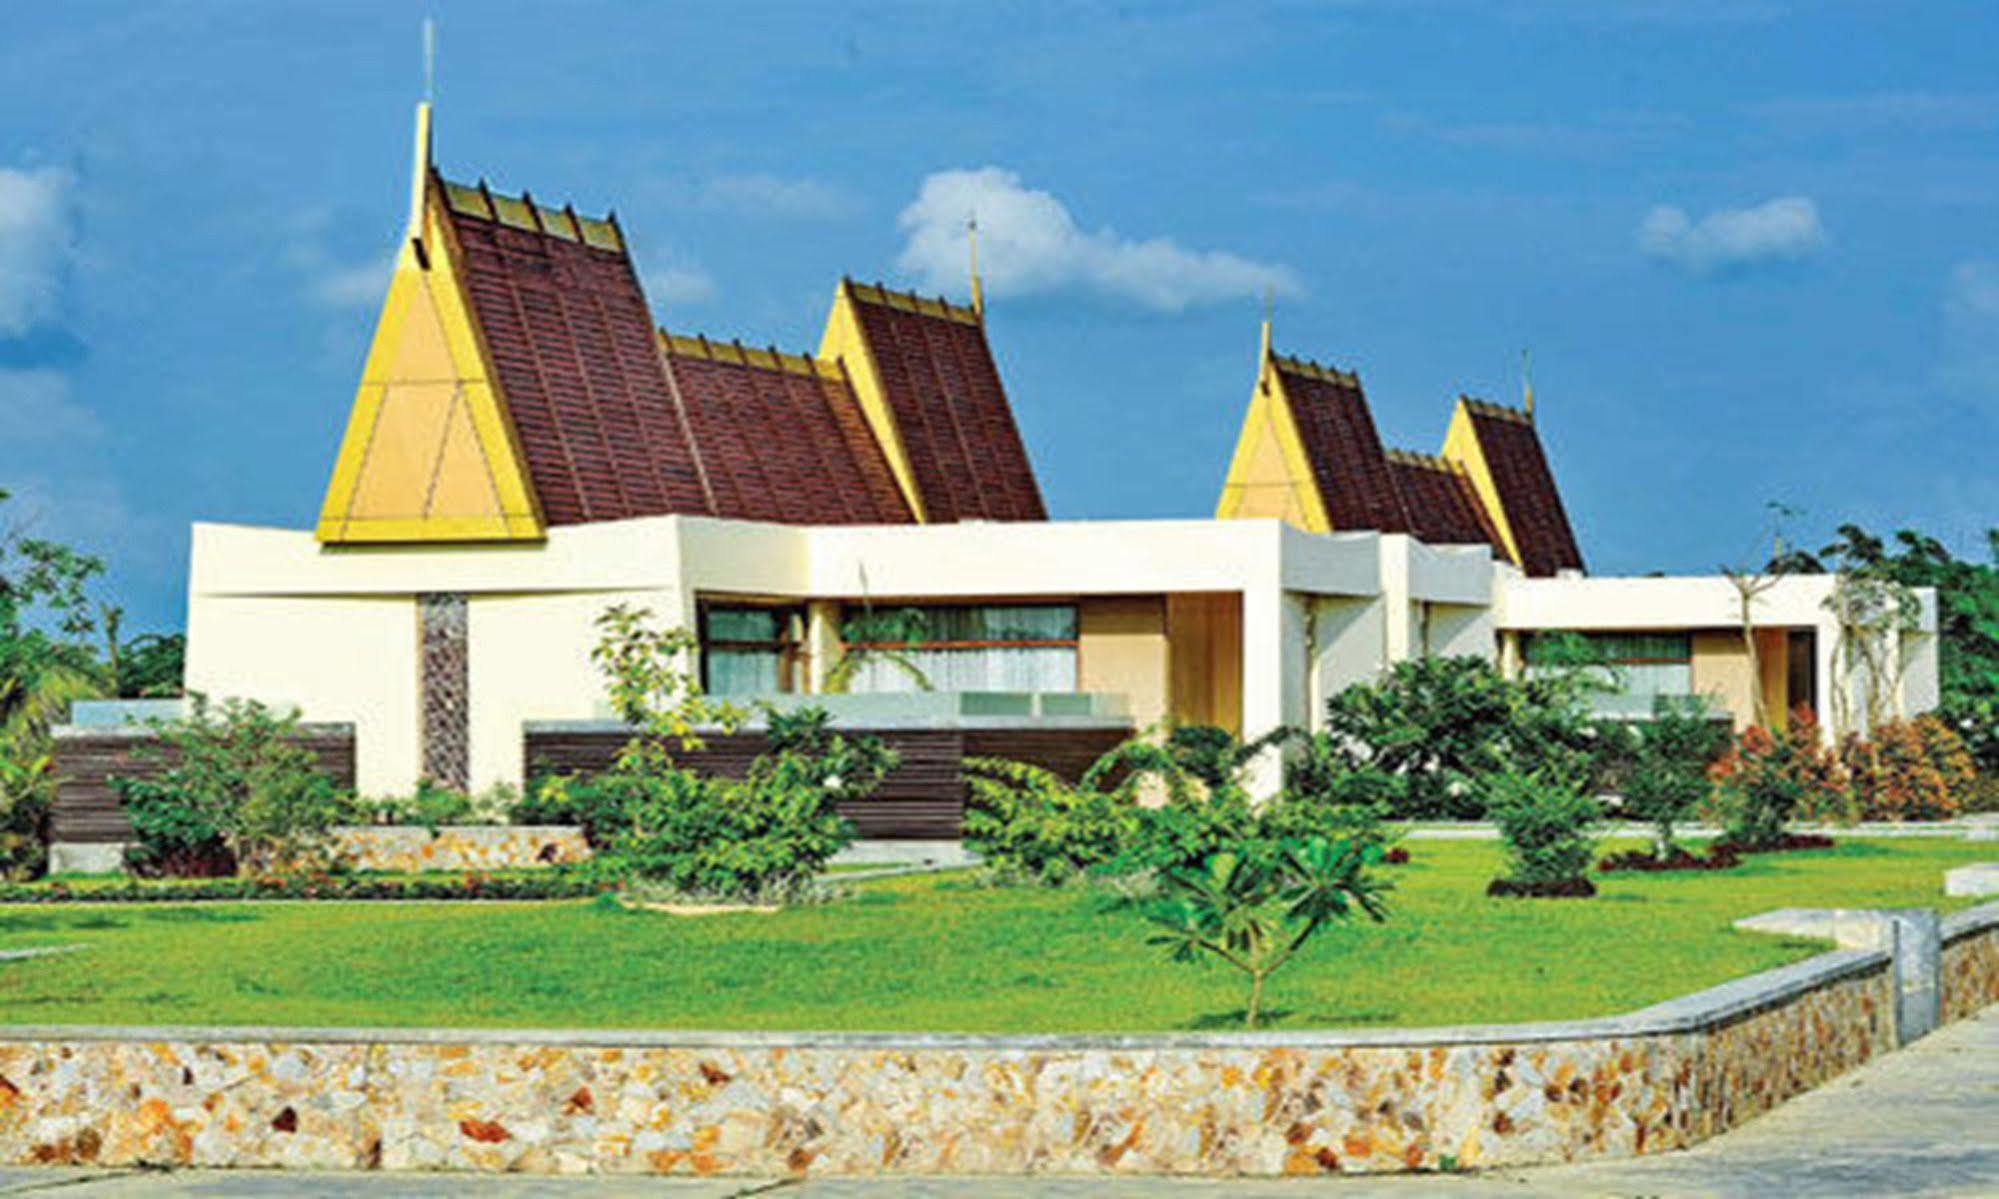 The Myat Mingalar Hotel Naypyidaw Экстерьер фото